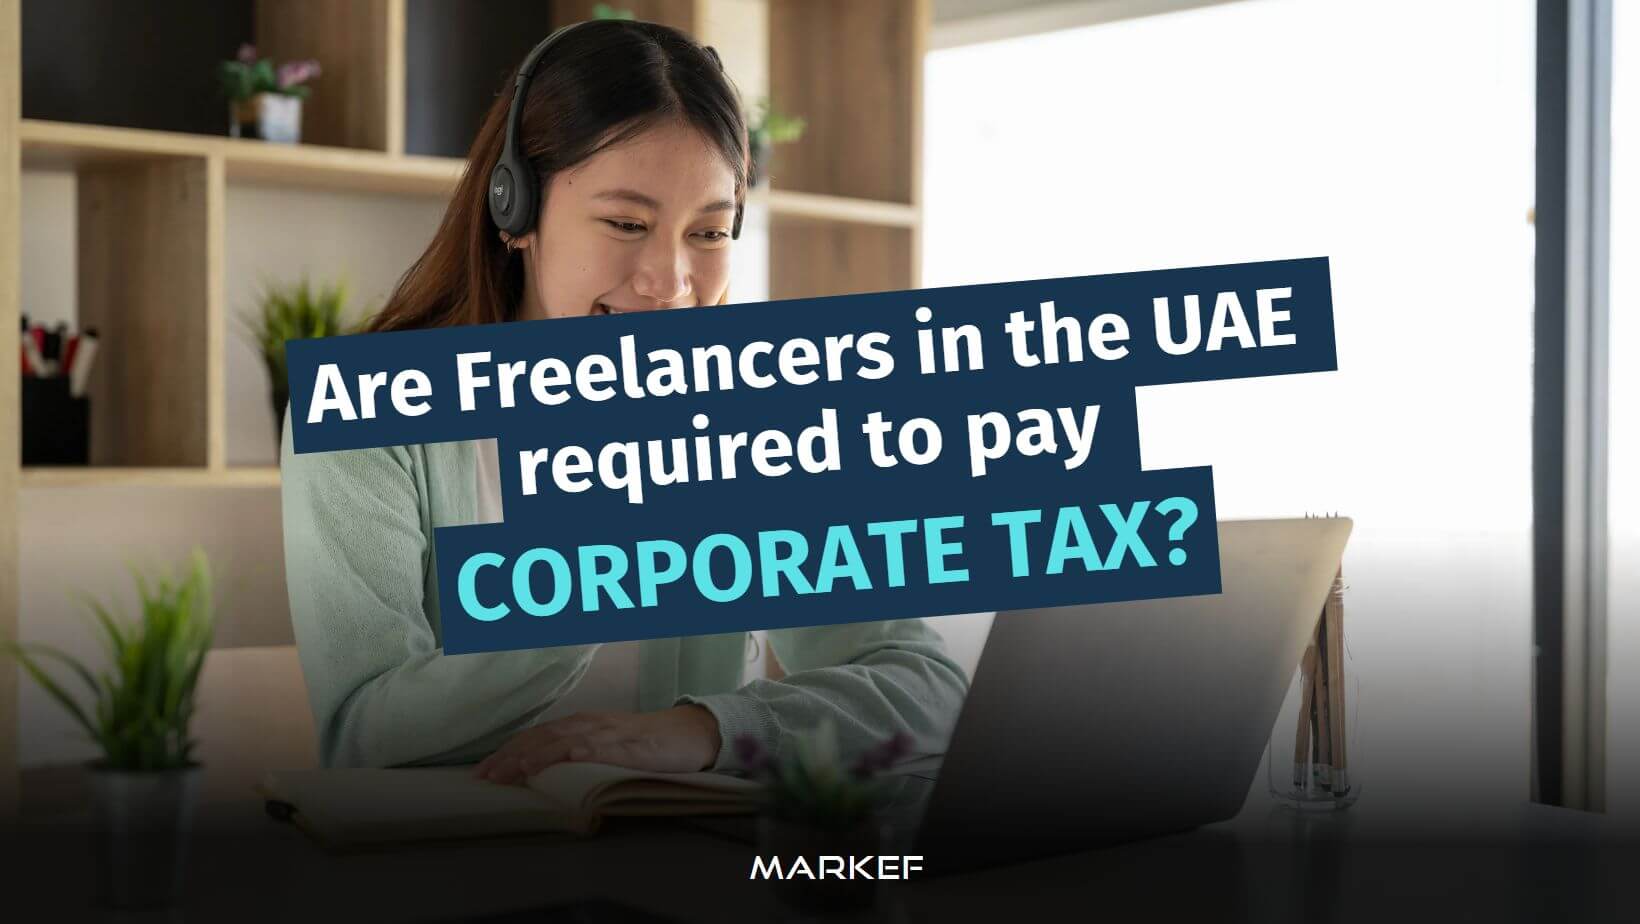 Freelancers in the UAE